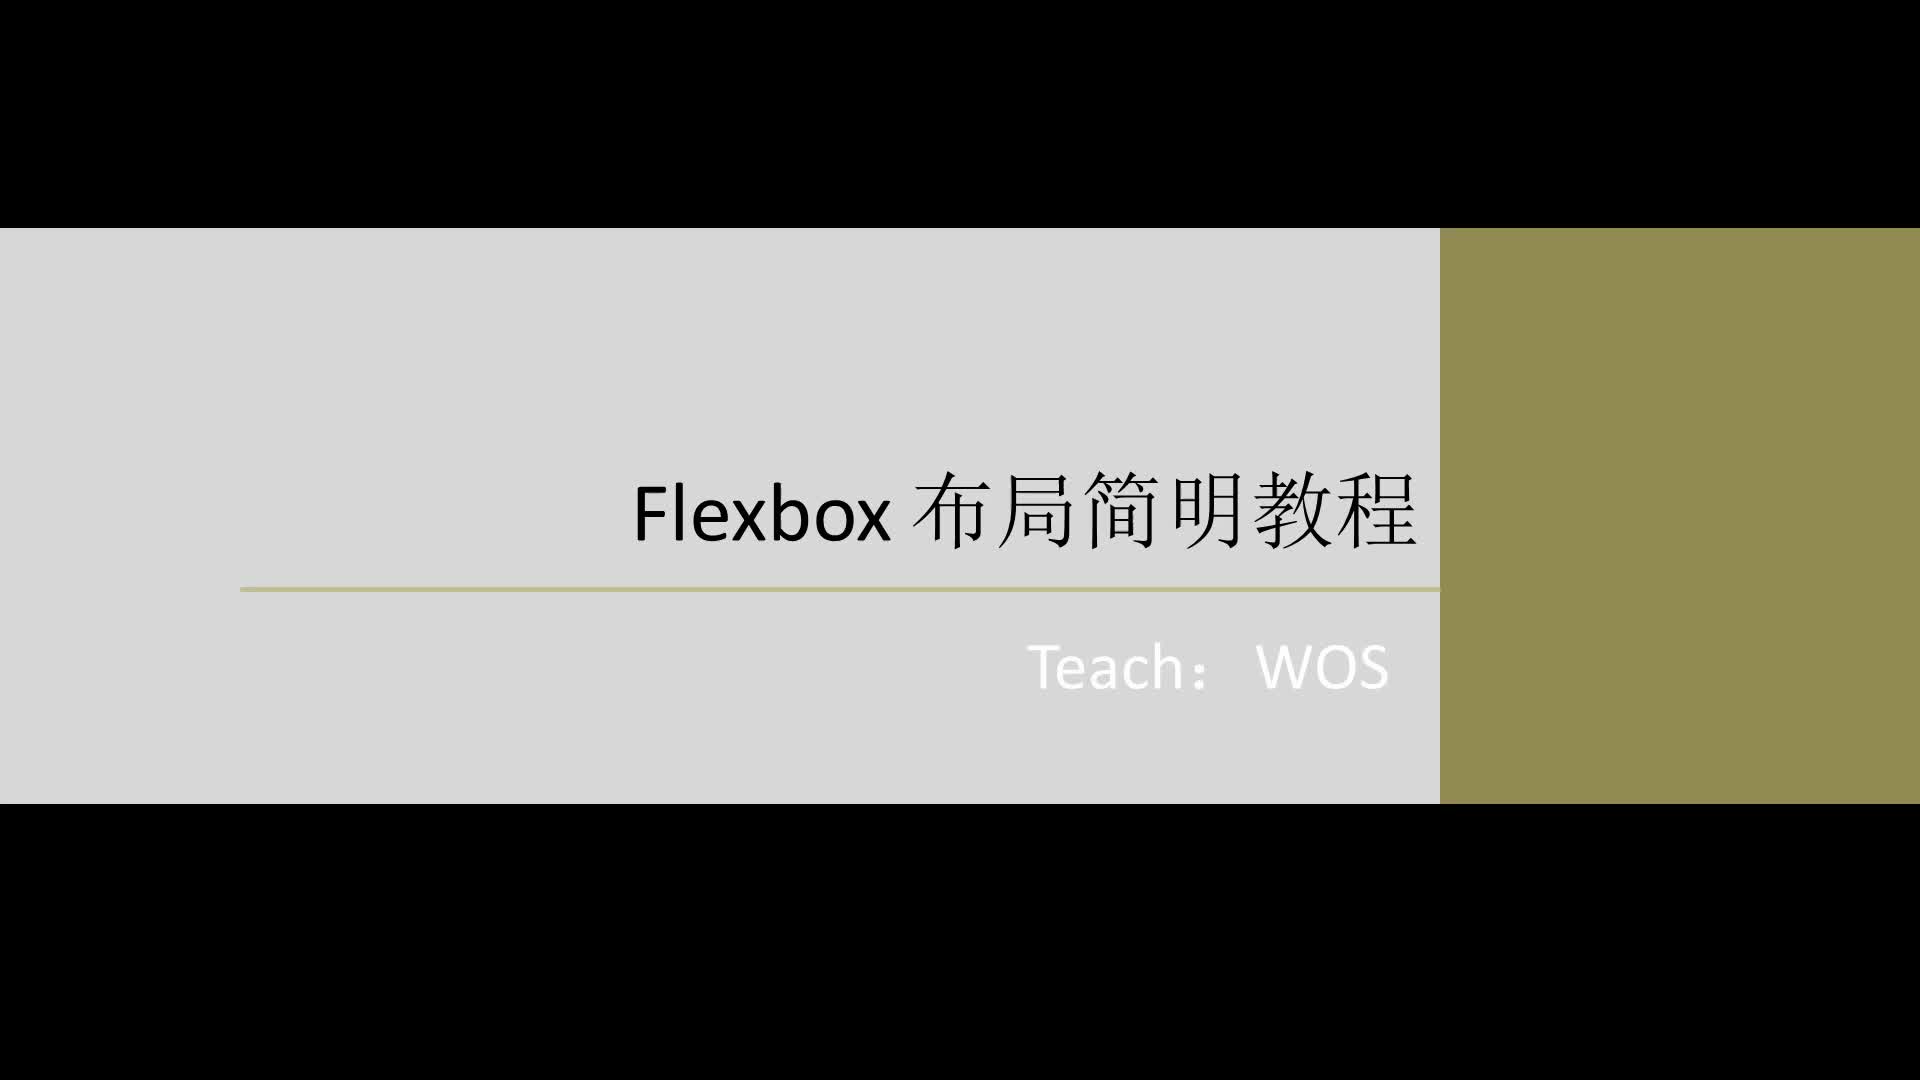 Flexbox 布局简明教程